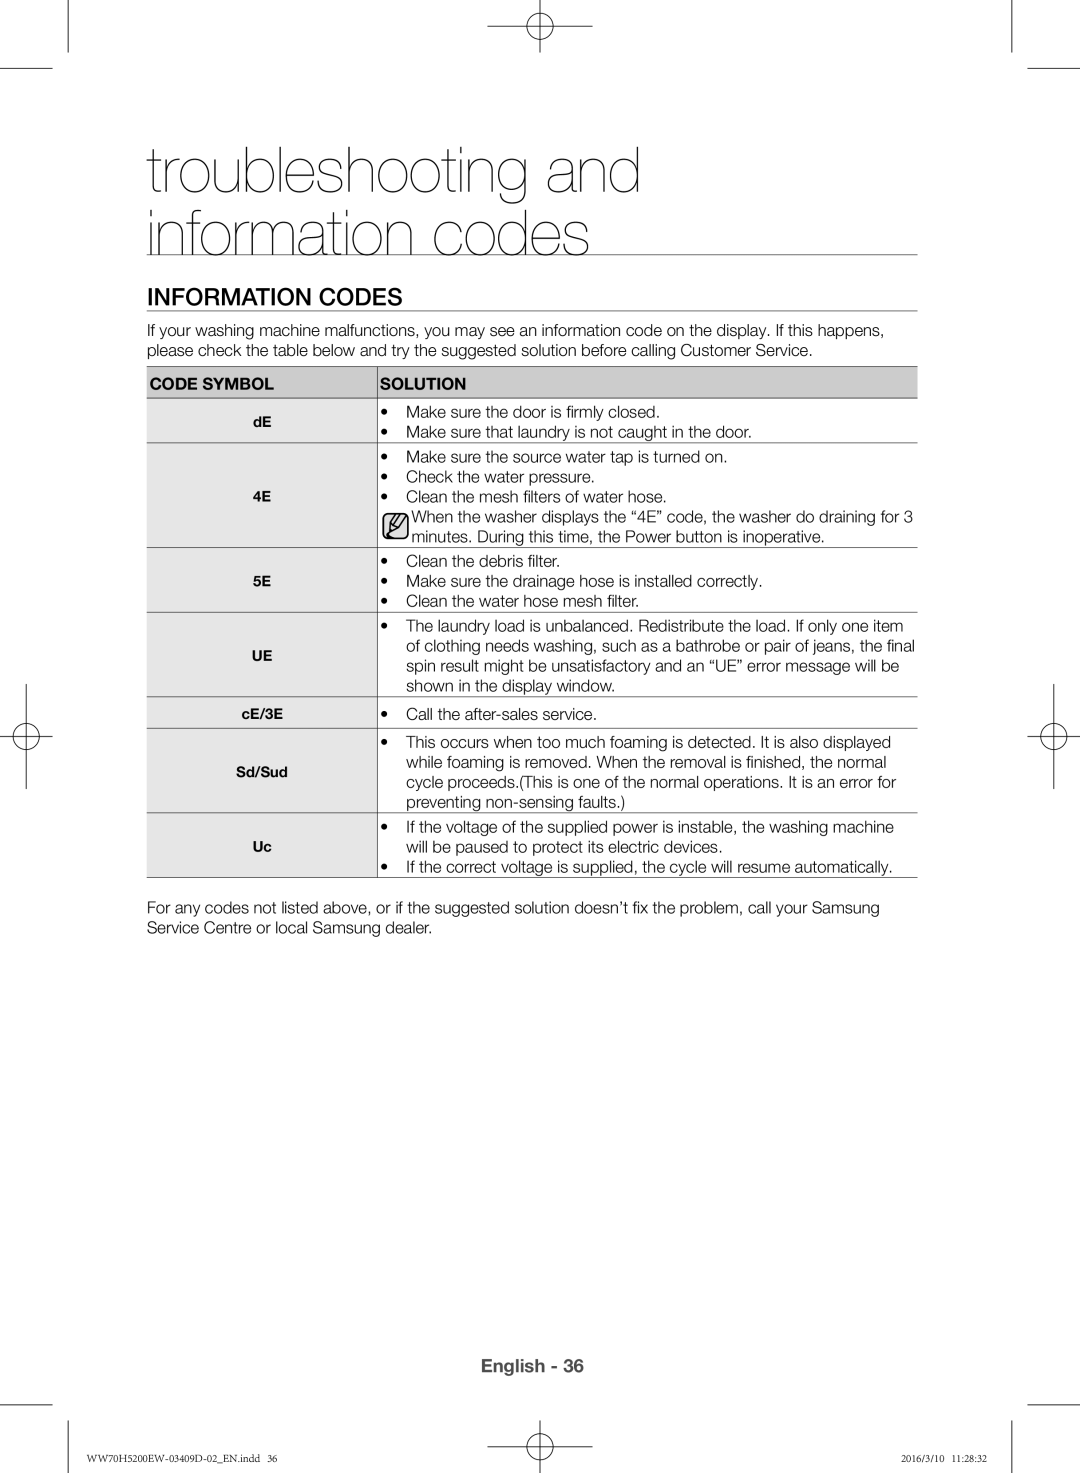 Samsung WW70H5200EW/KJ manual Information codes, Code Symbol Solution 